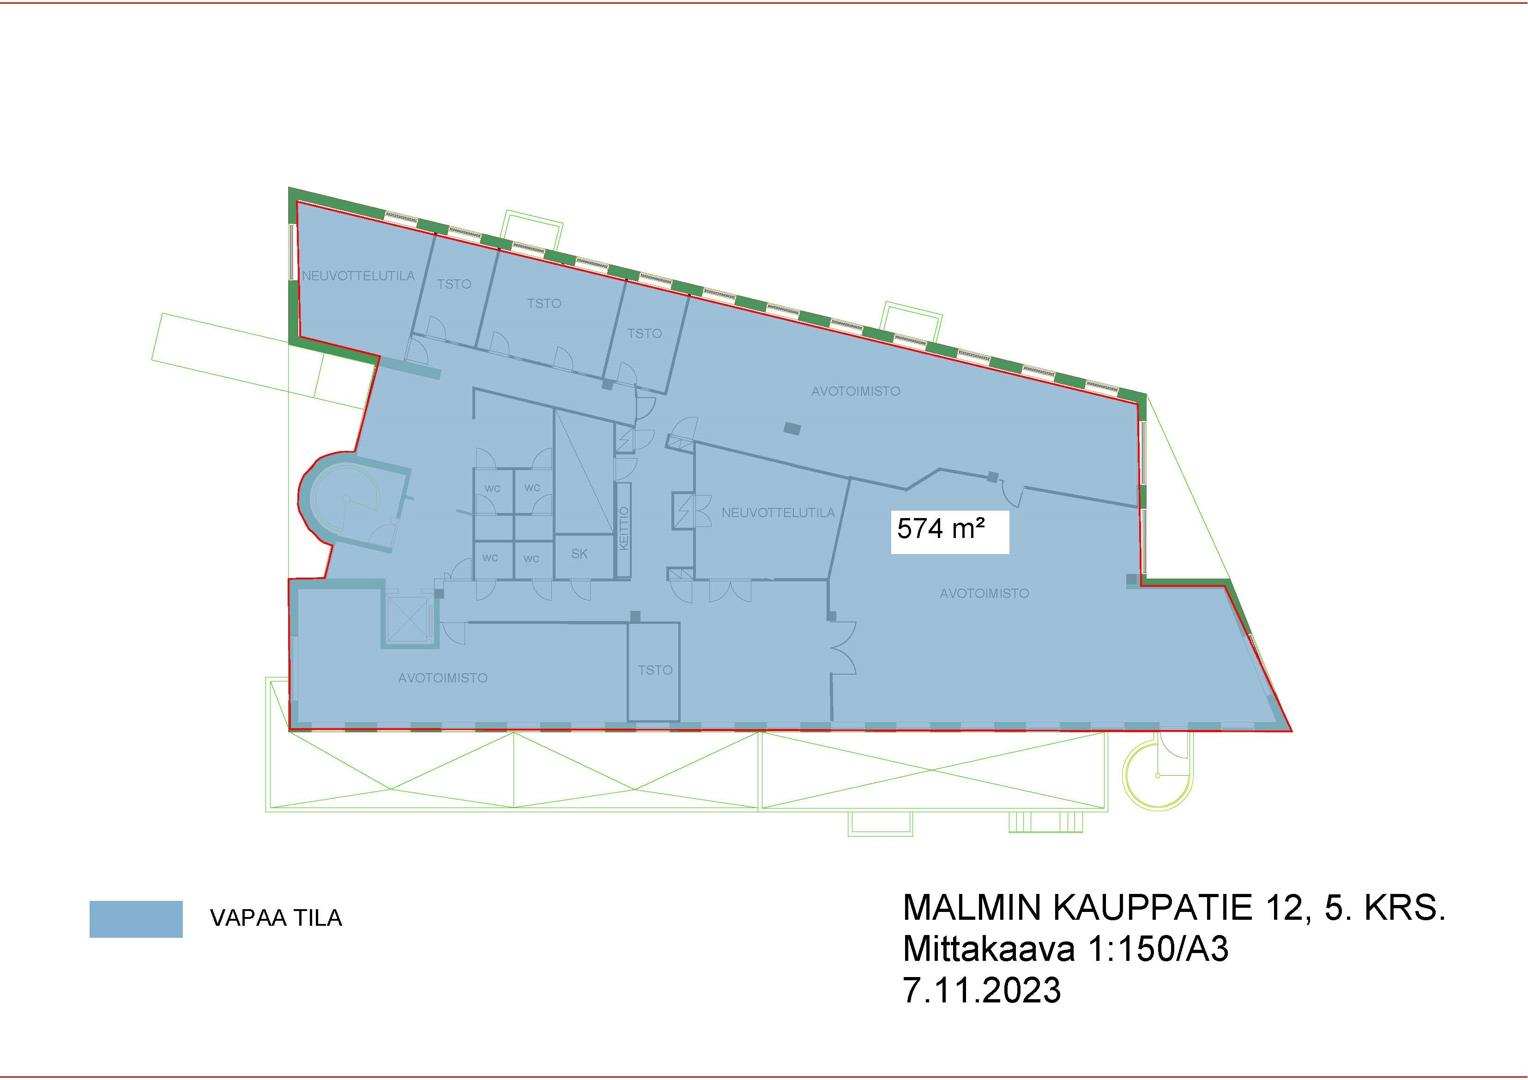 Malmin Kauppatie 12, 574m2, 5. kerros, Toimistotila